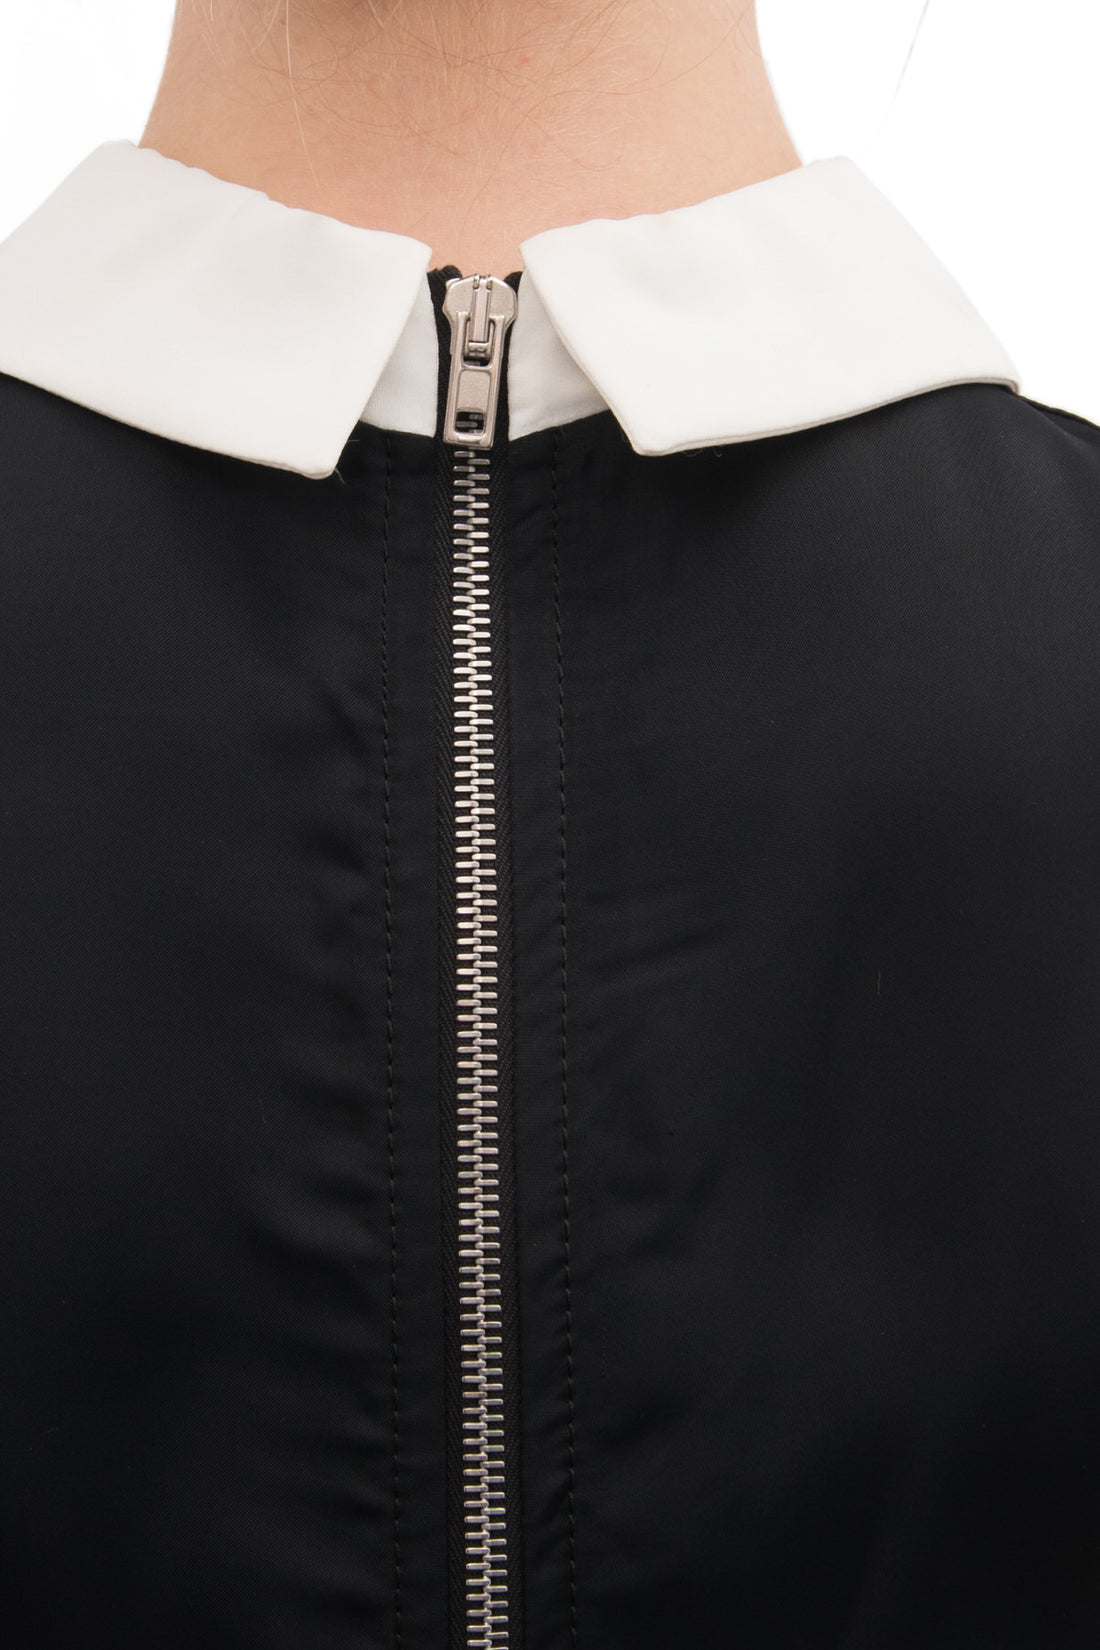 Miu Miu Black Washed Satin Dress with White Collar